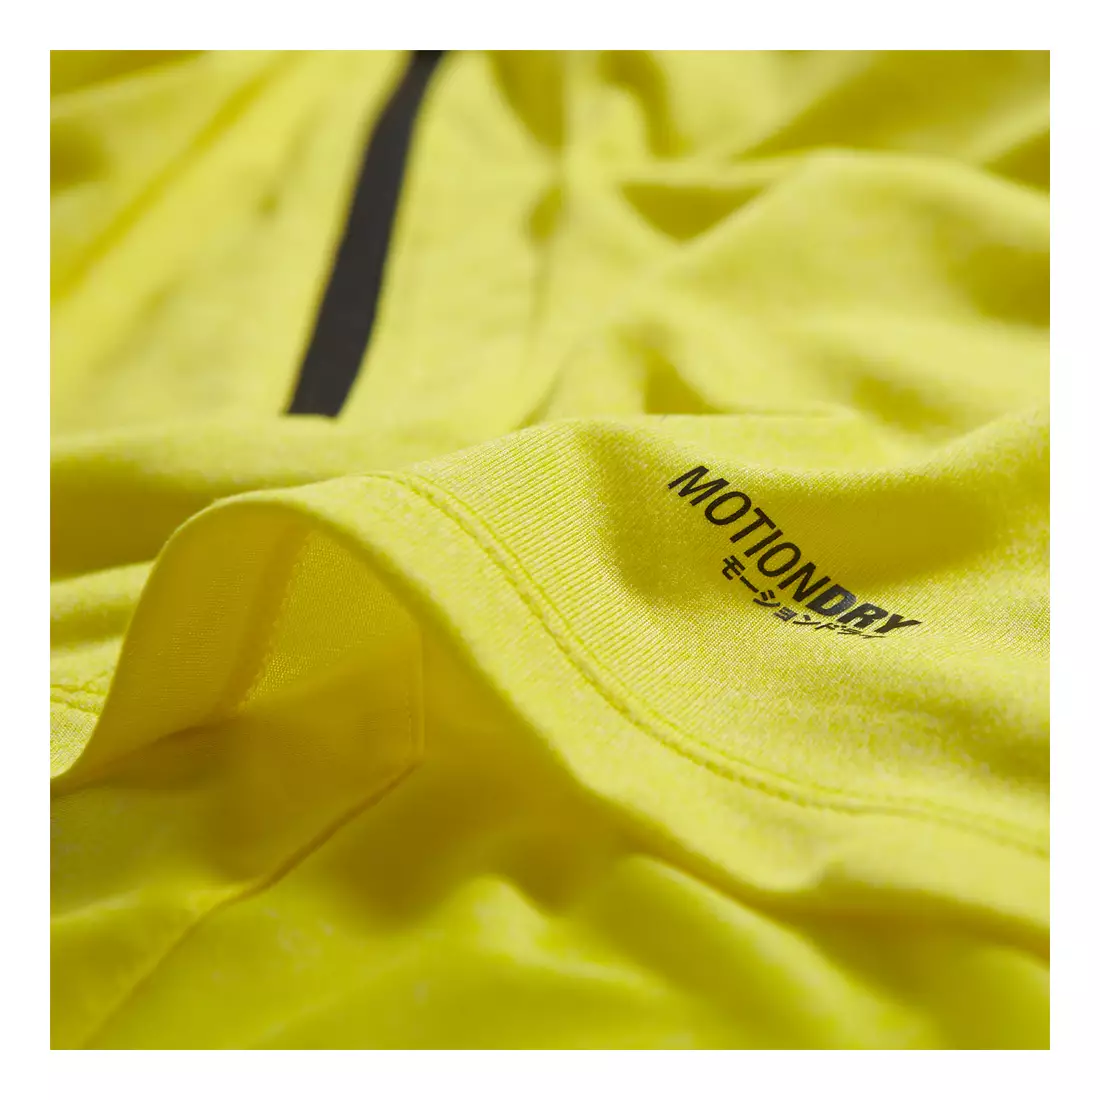 ASICS 110520-0396 SOUKAI 1/2 ZIP HOODIE - men's T-shirt with hood, color: Yellow